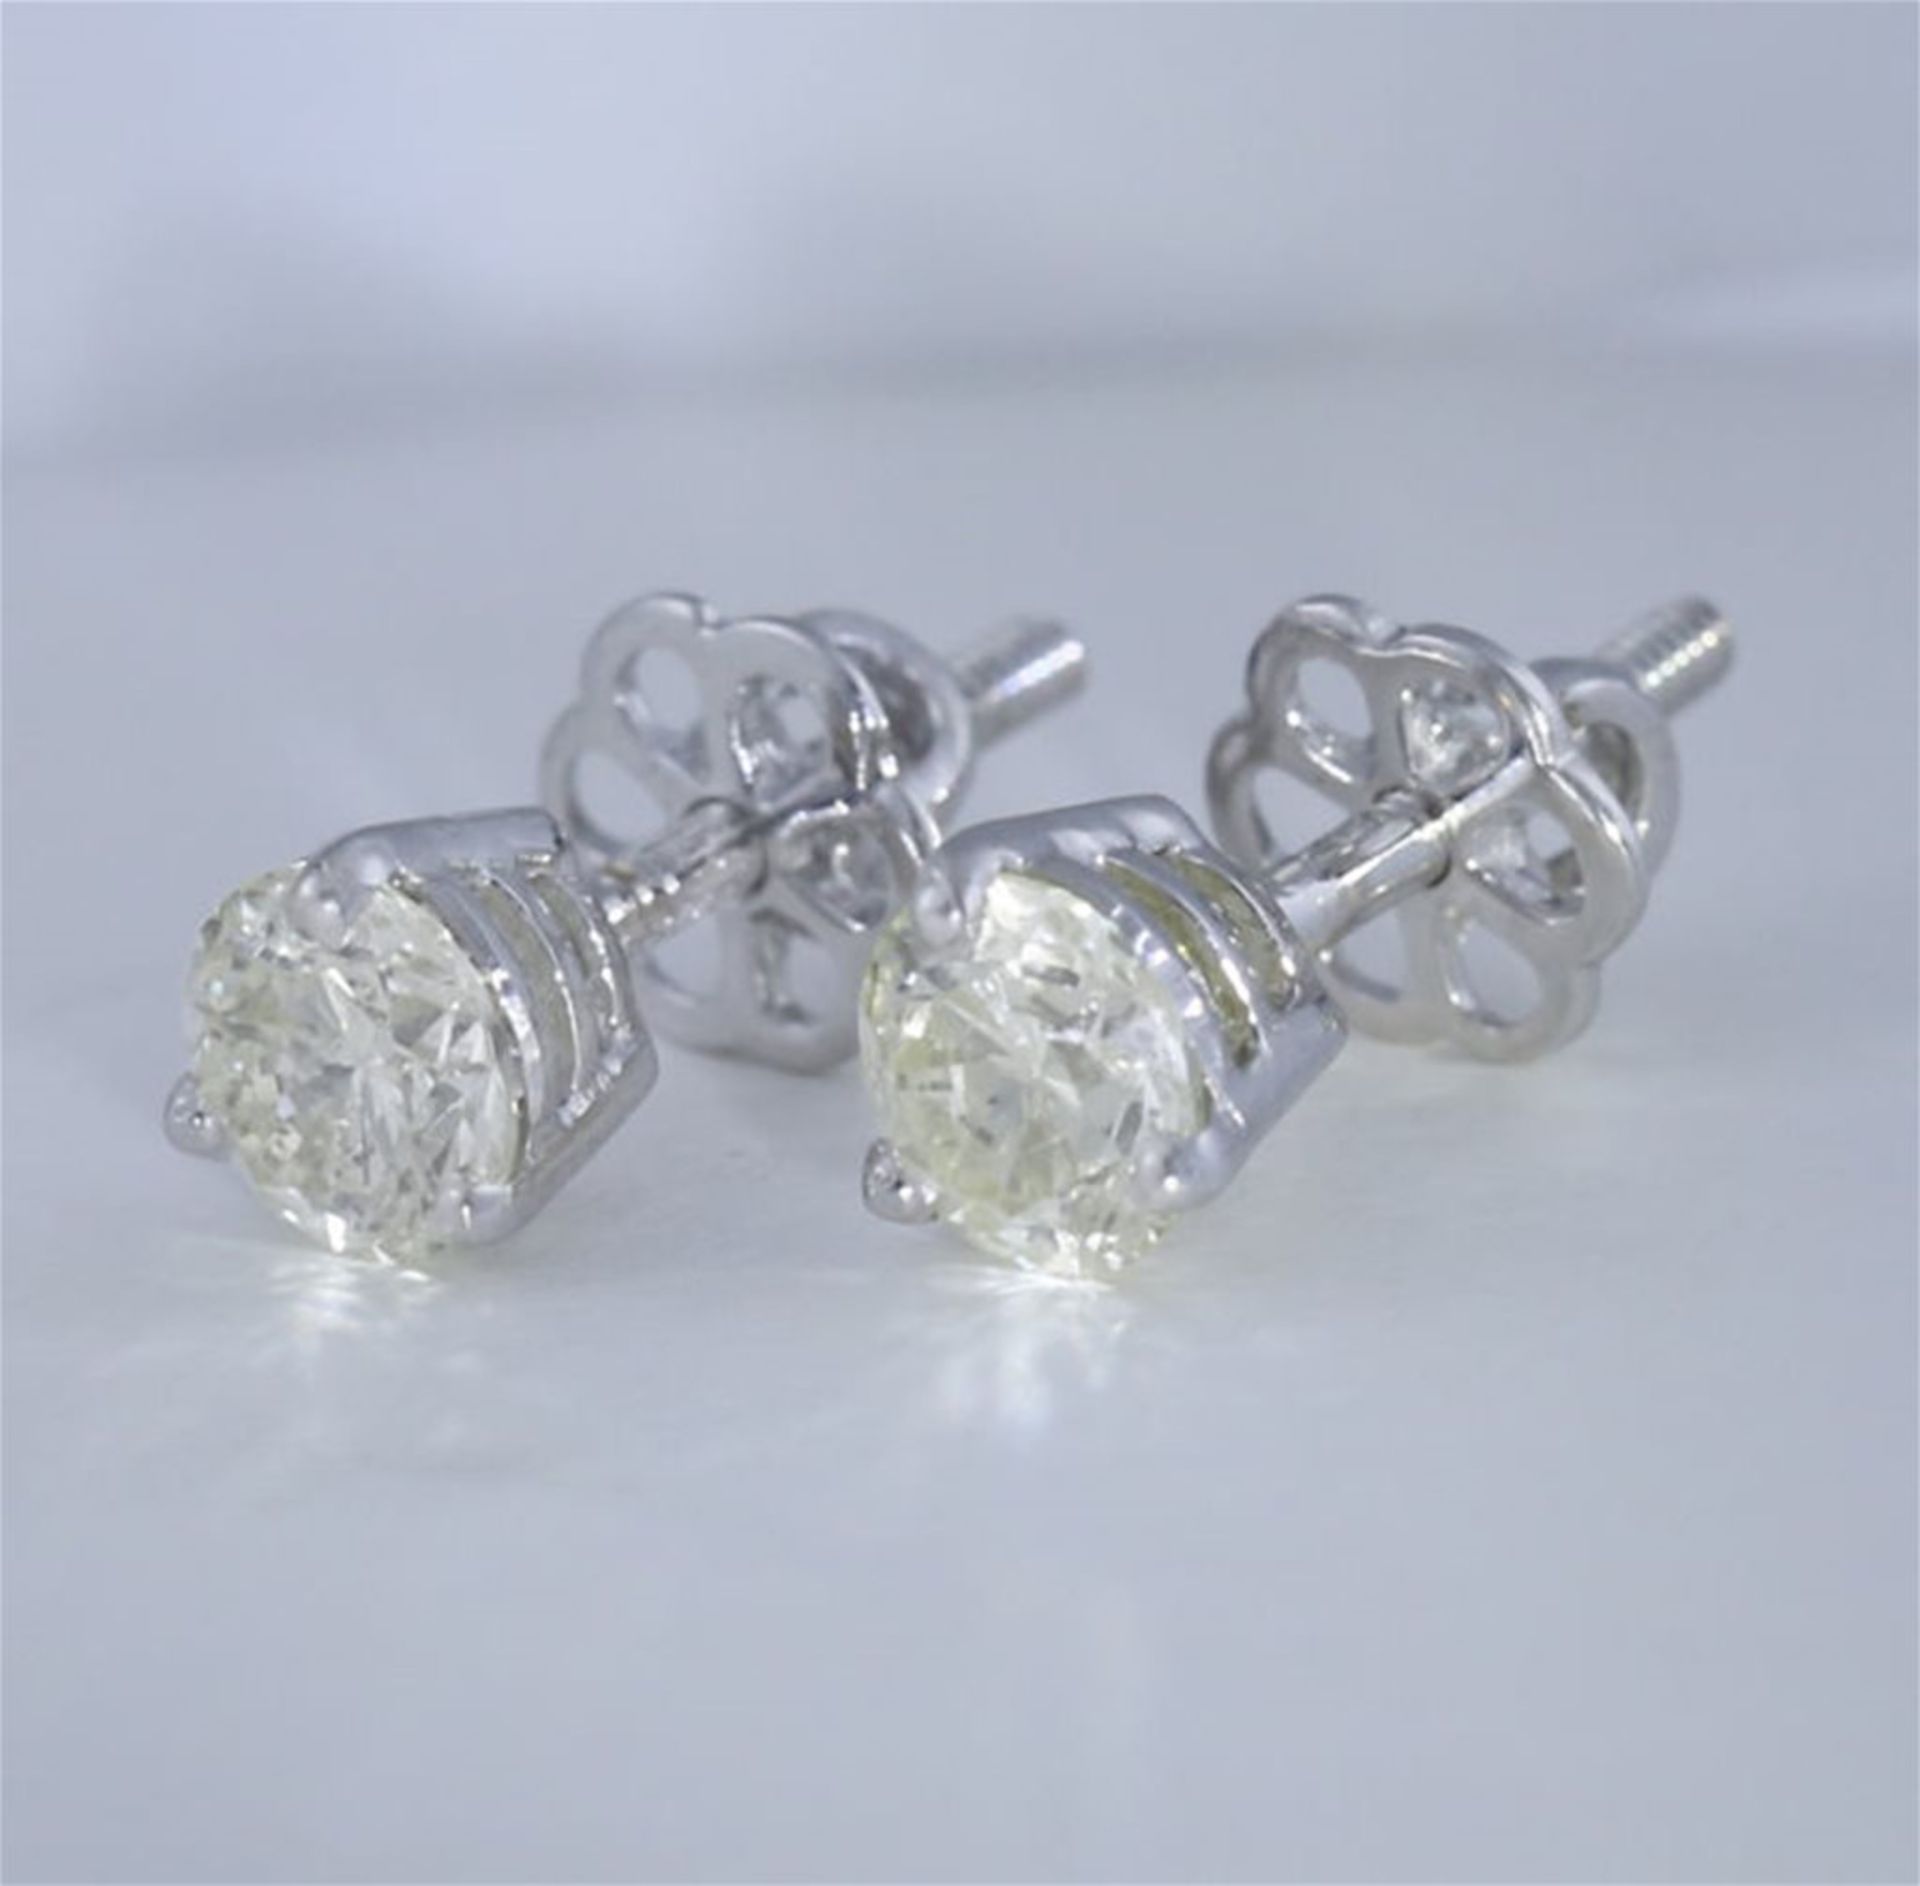 14 K / 585 White Gold Solitaire Diamond Earrings - Image 3 of 4